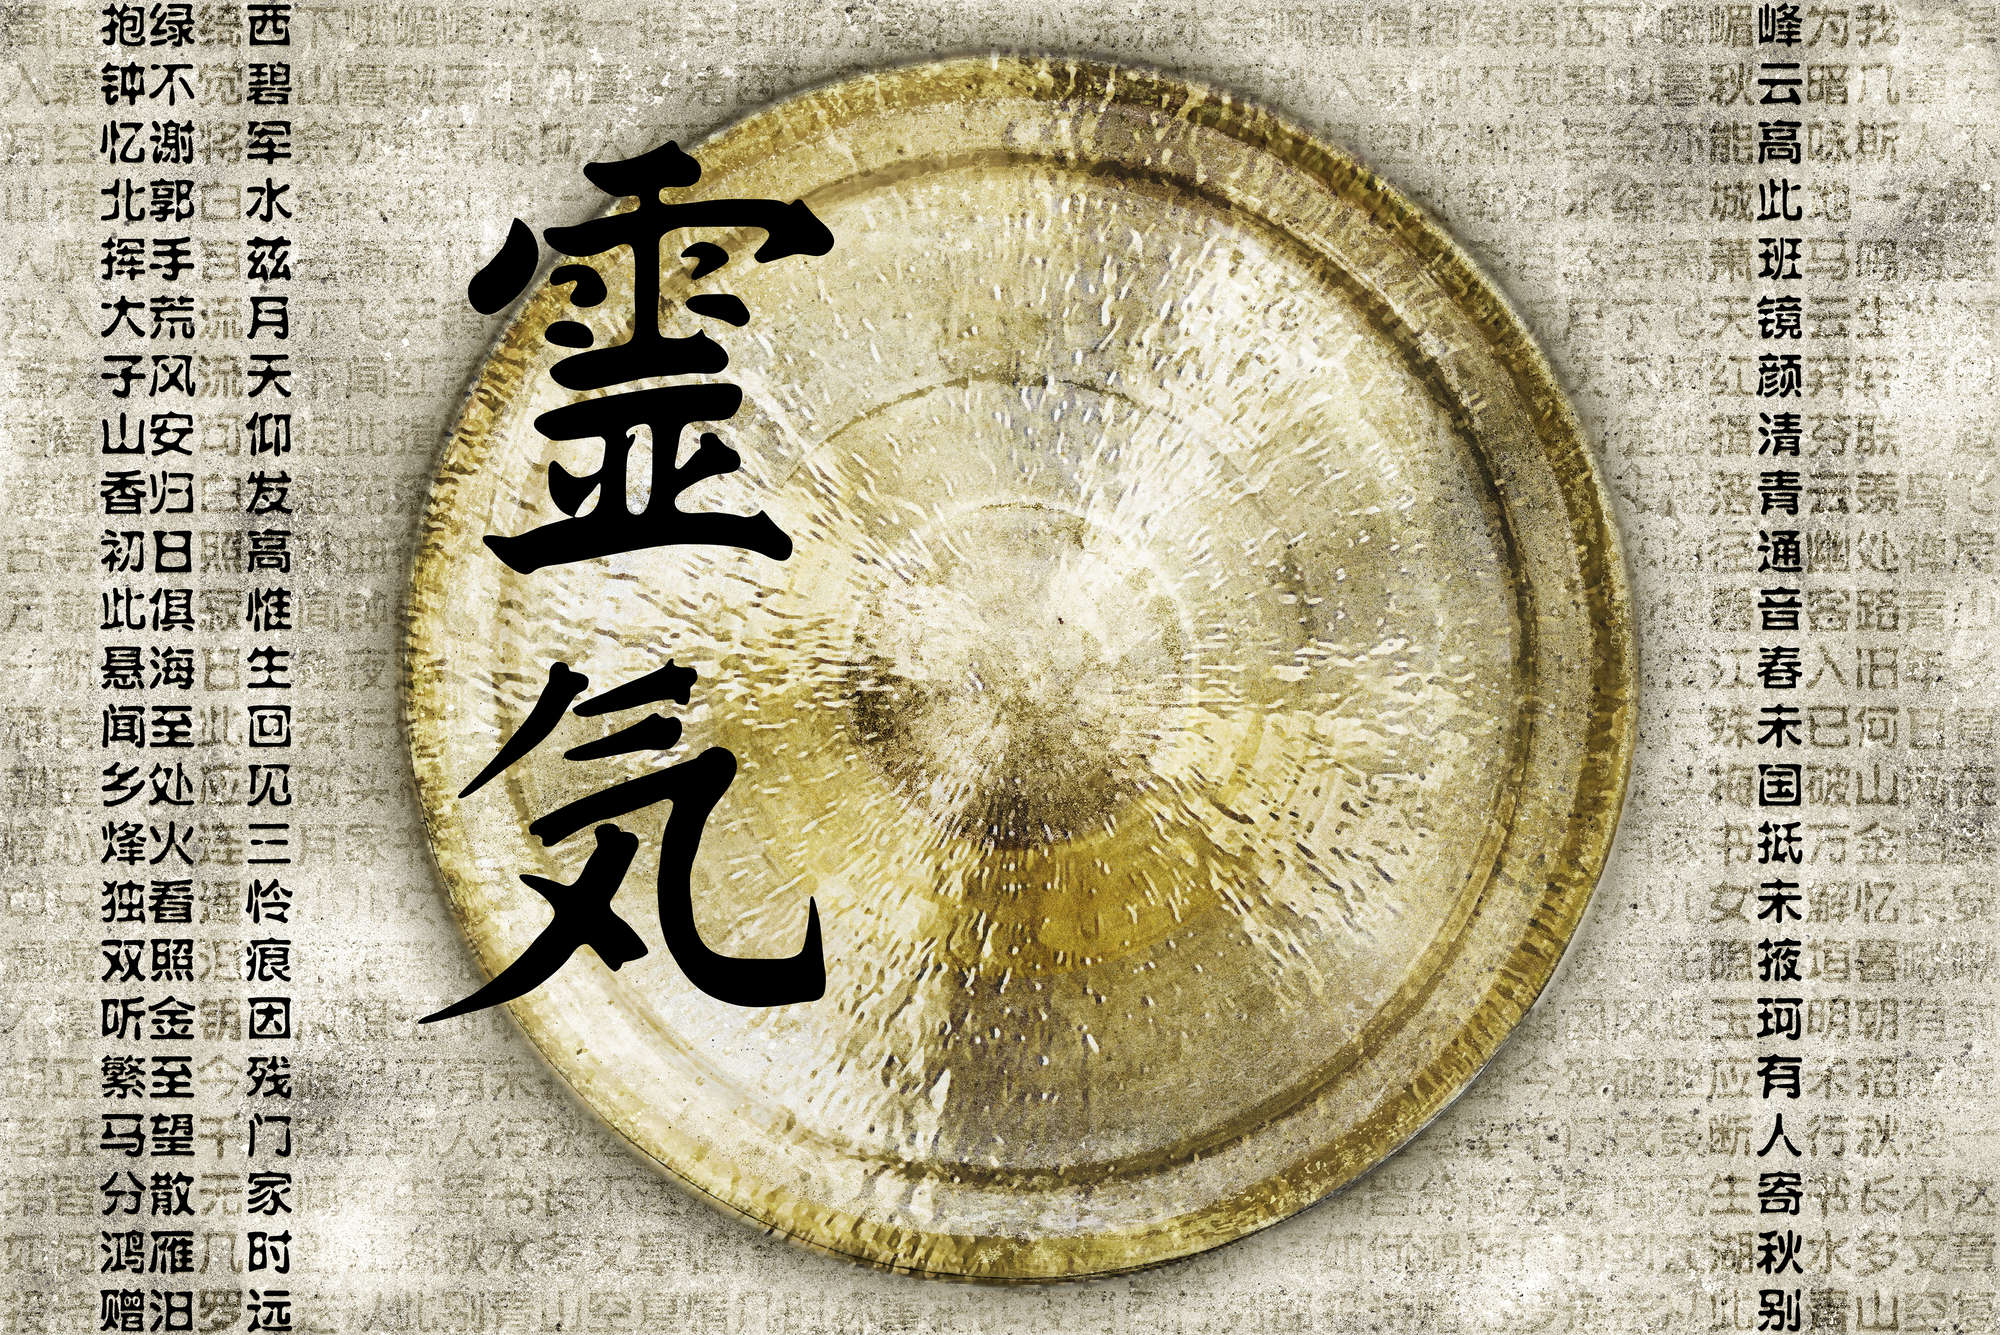             Aziatisch gongbehang - parelmoer glad vlies
        